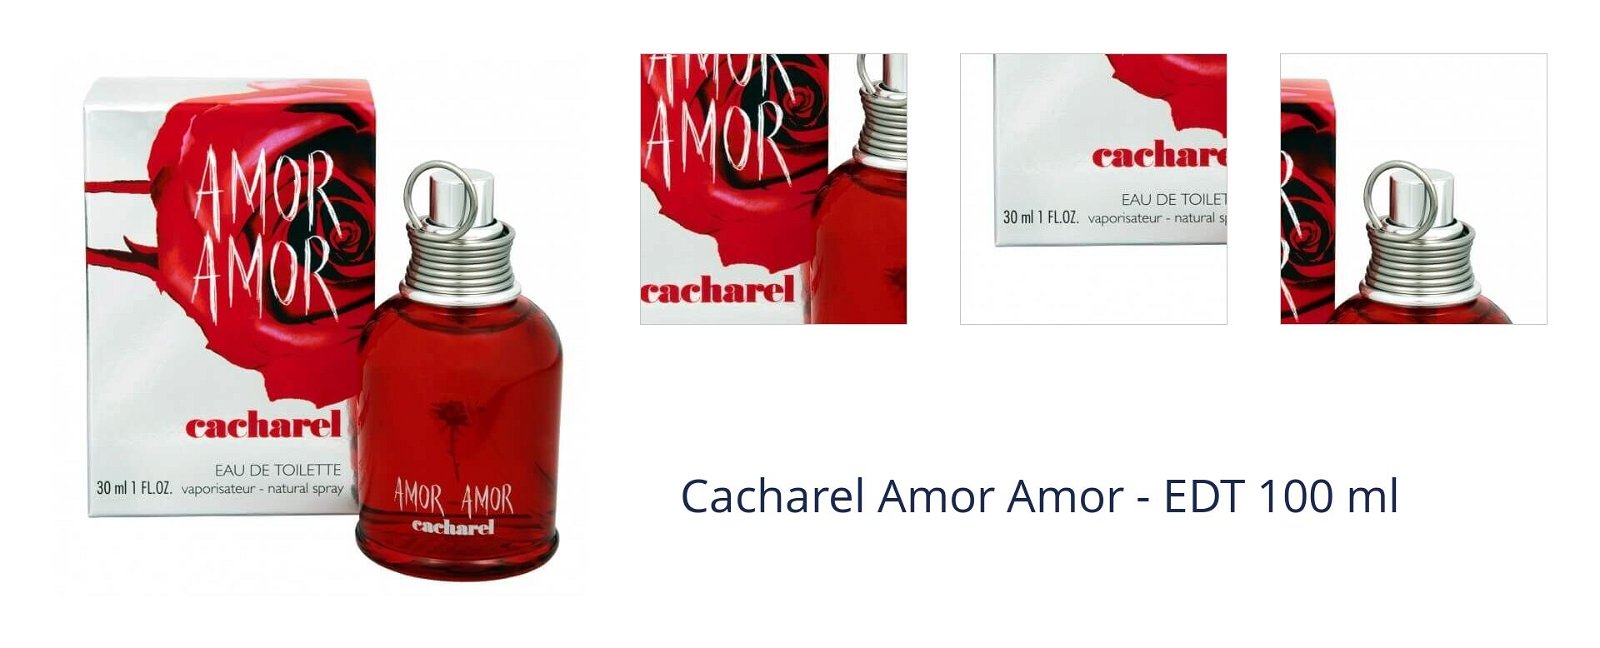 Cacharel Amor Amor - EDT 100 ml 1